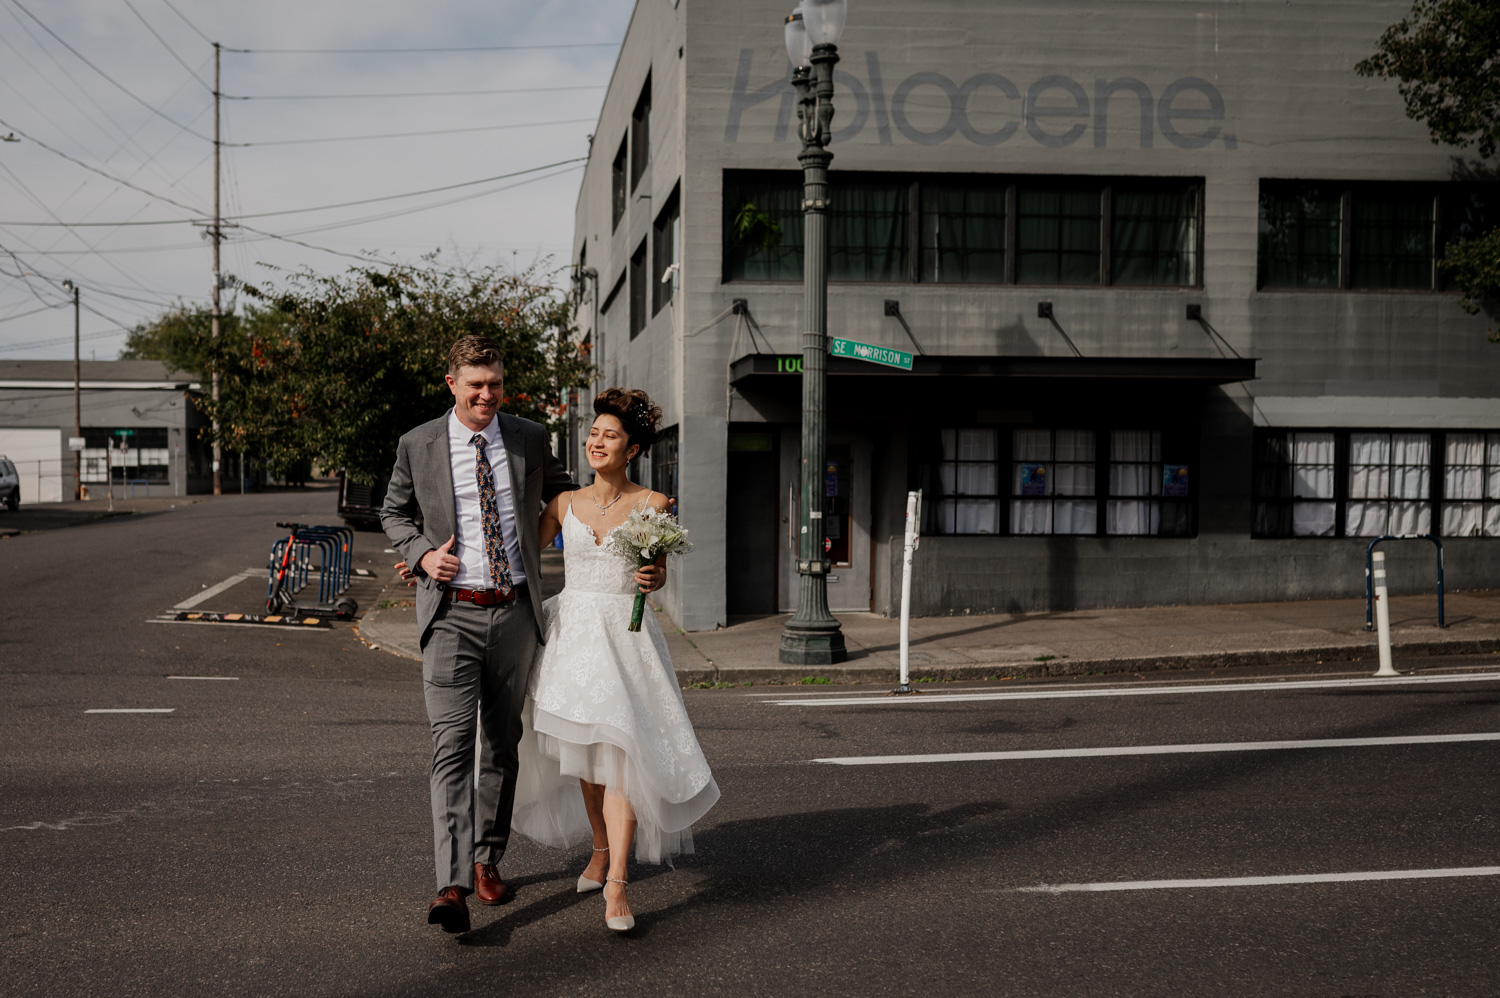 Holocene Portland Wedding Venue